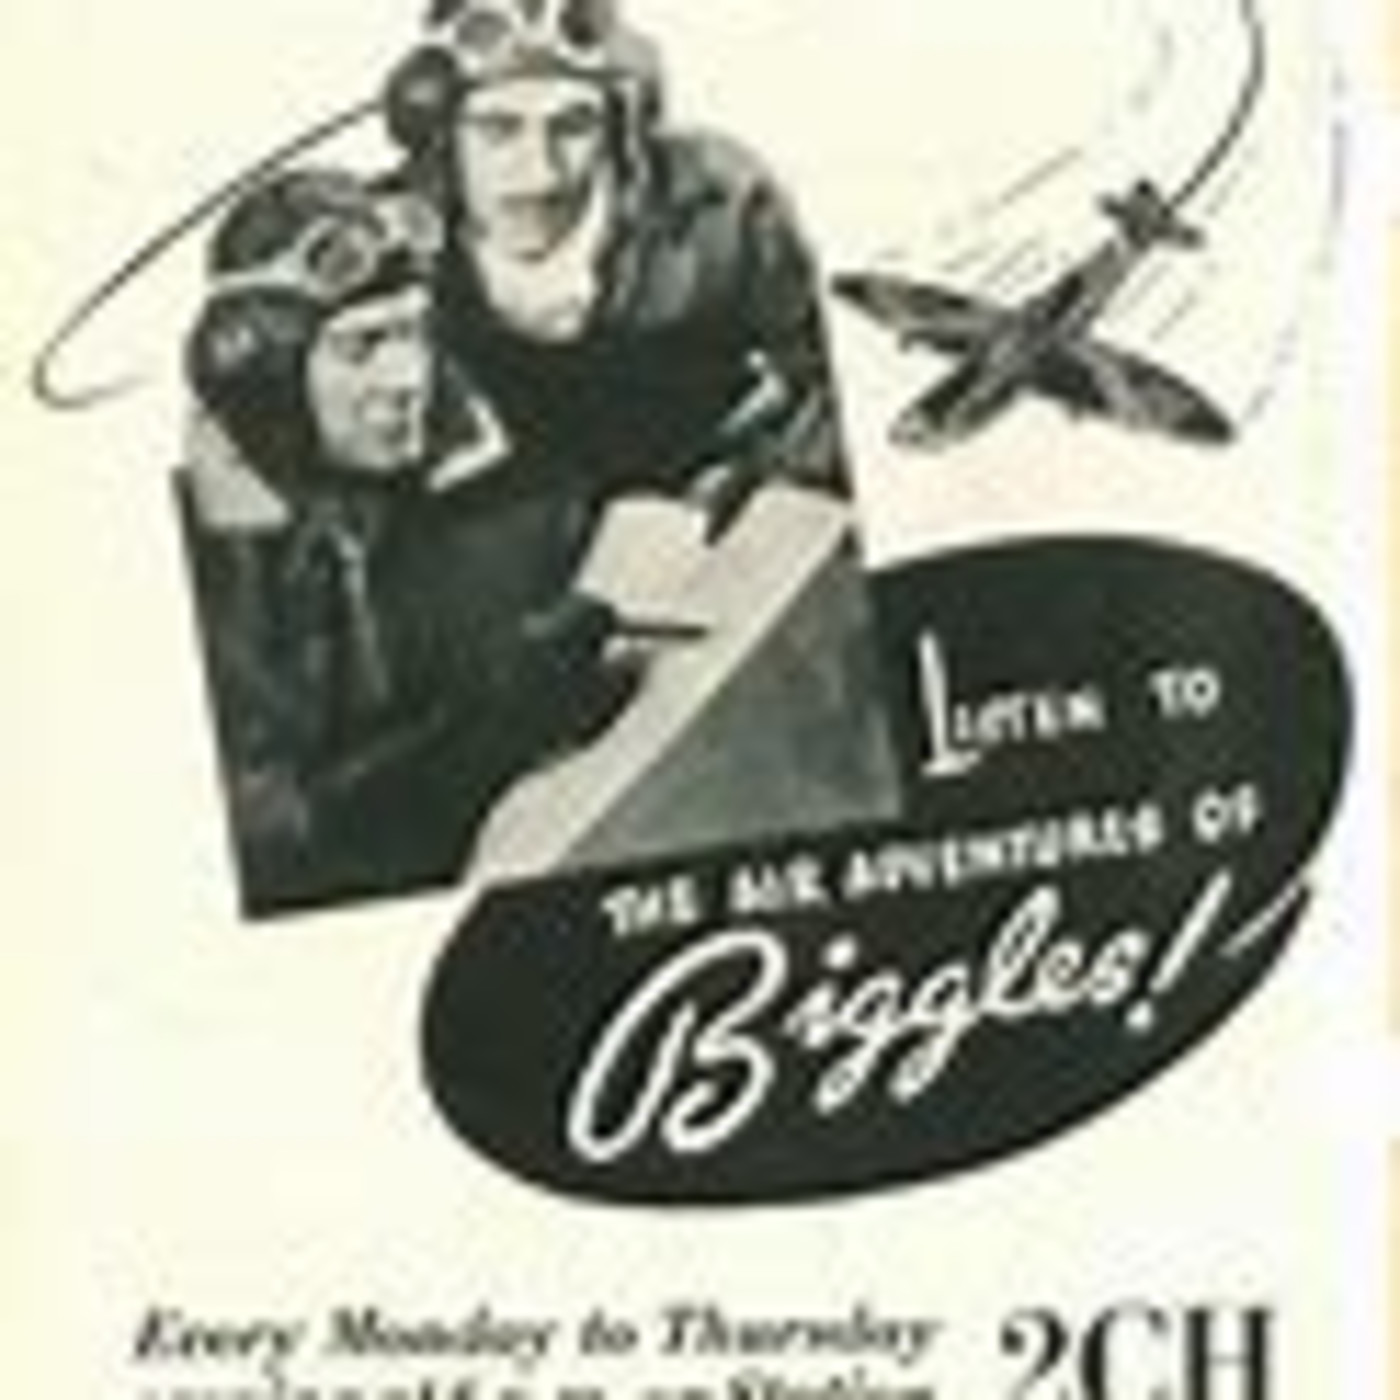 Air Adventures of Biggles xx-xx-xx International Brigade (23)